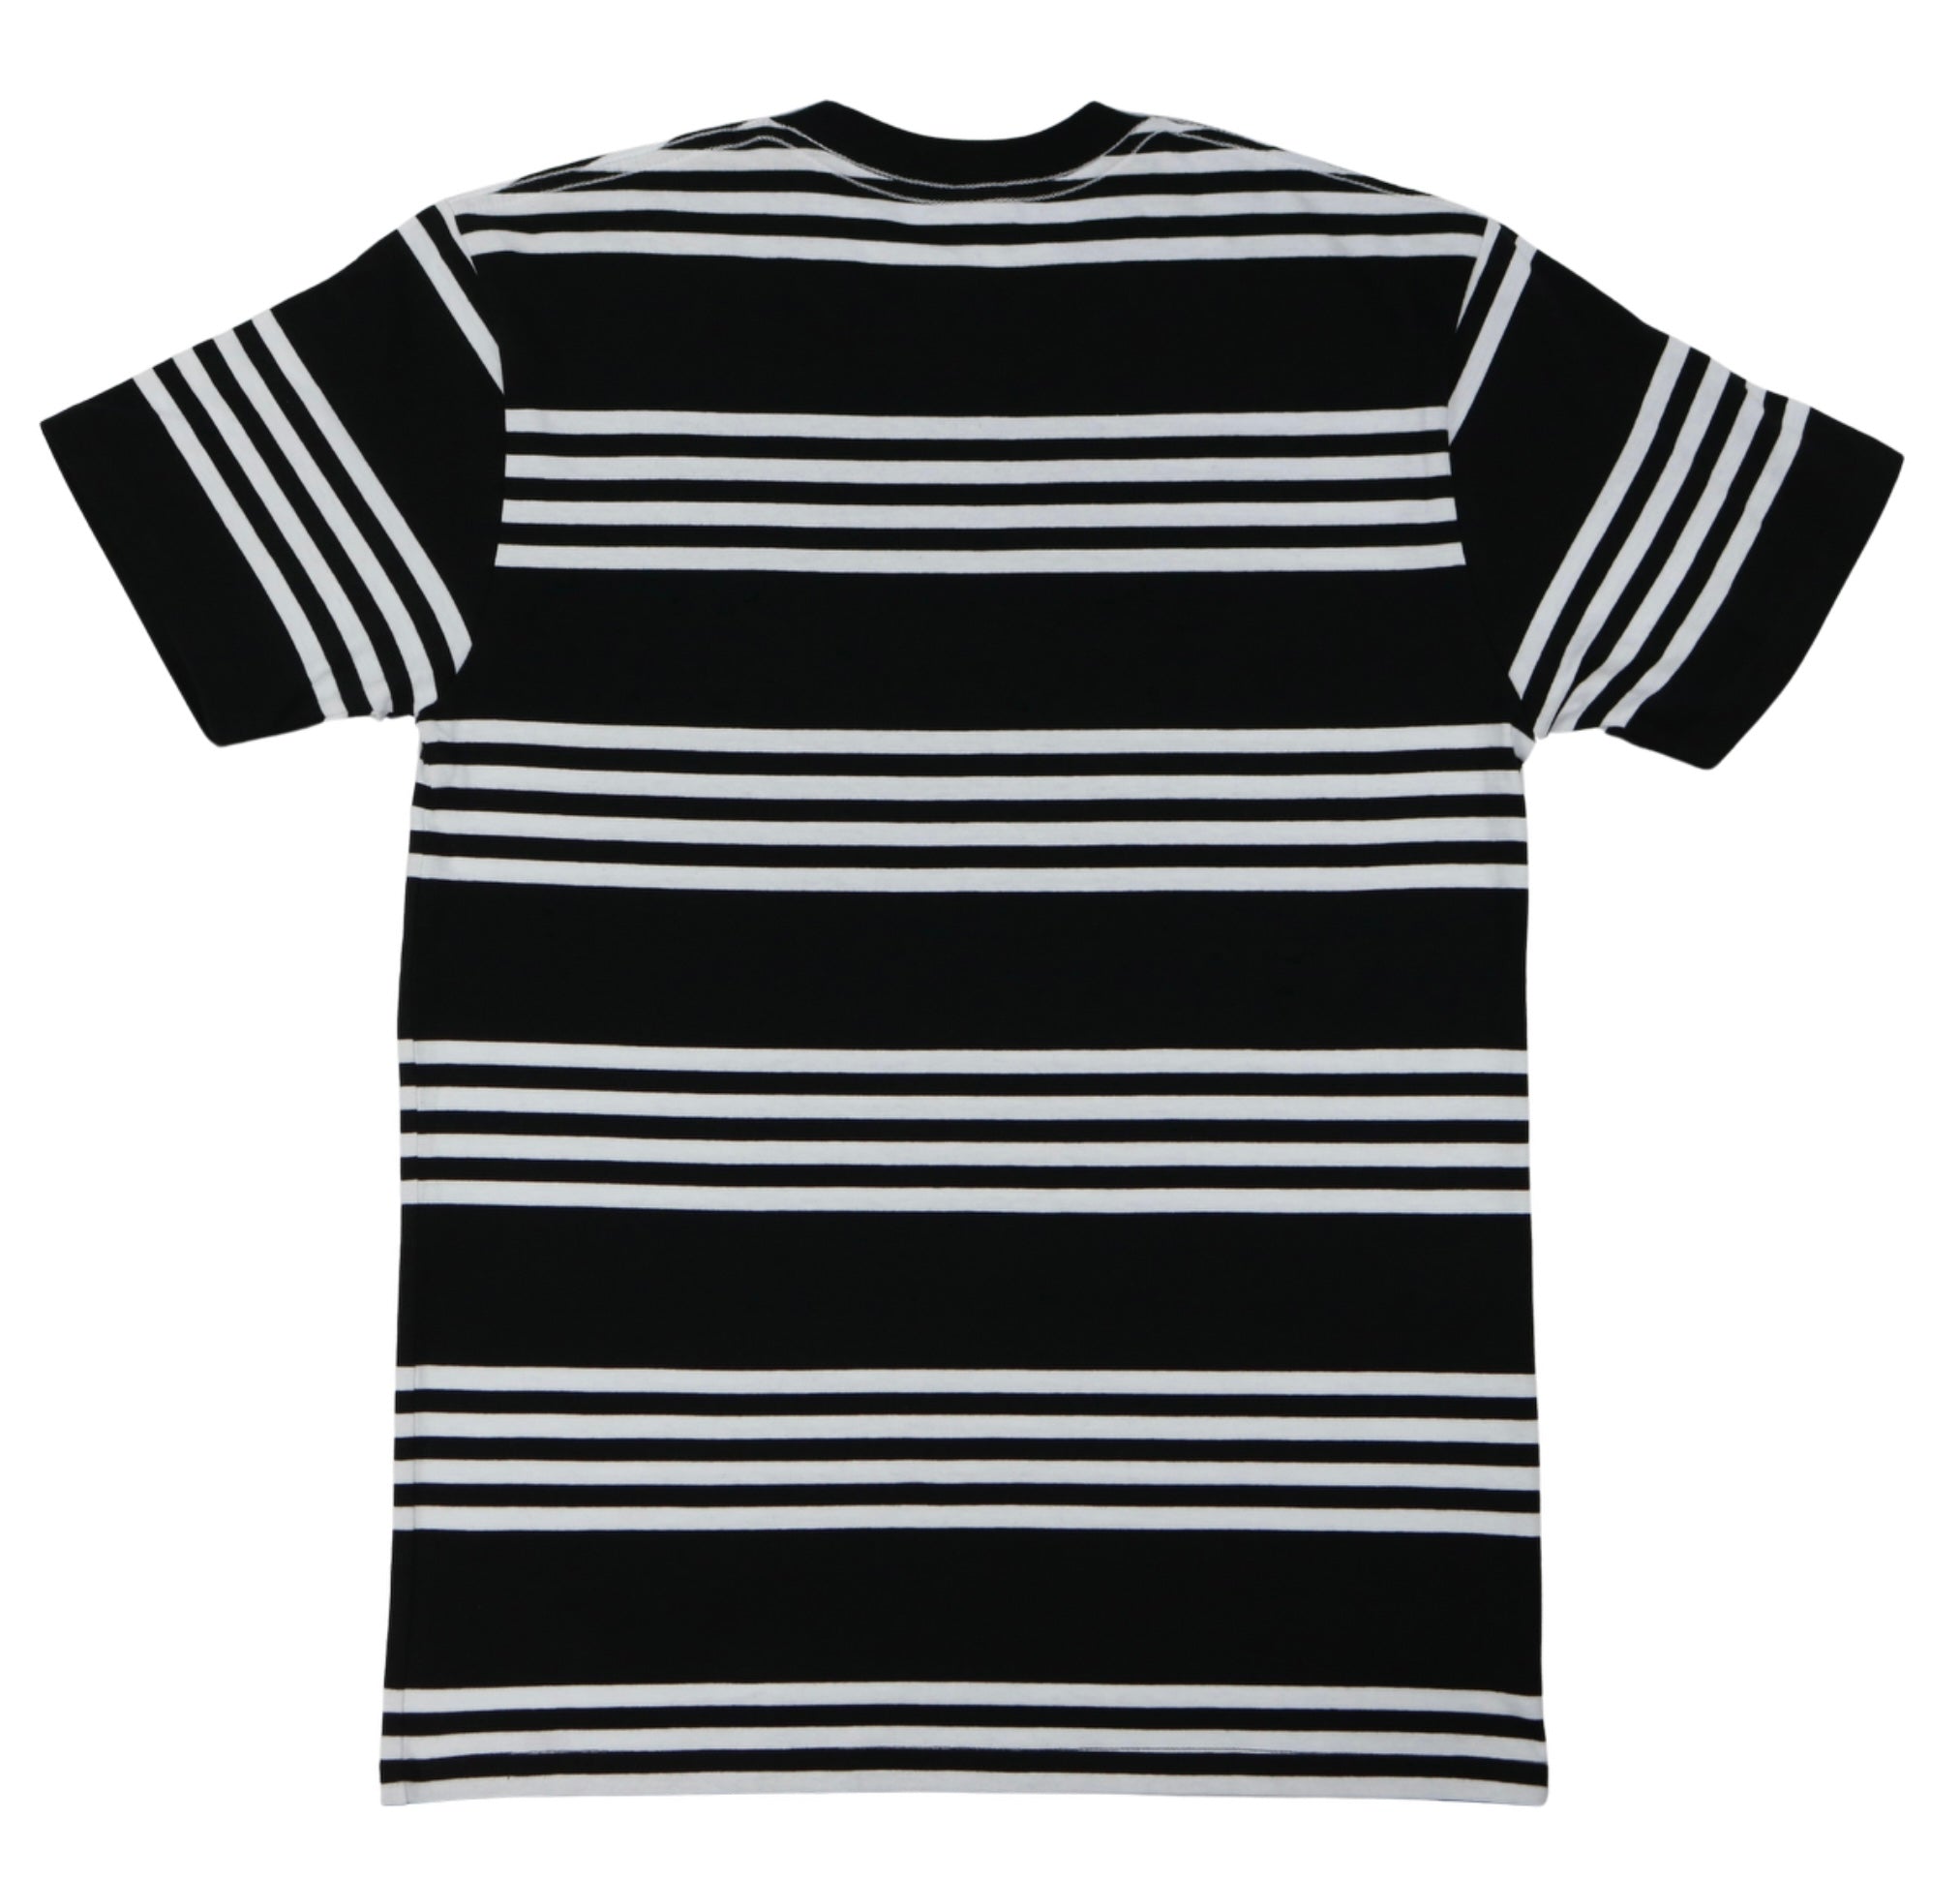 Dirt Surfer Patch Black & White Stripe T-Shirt